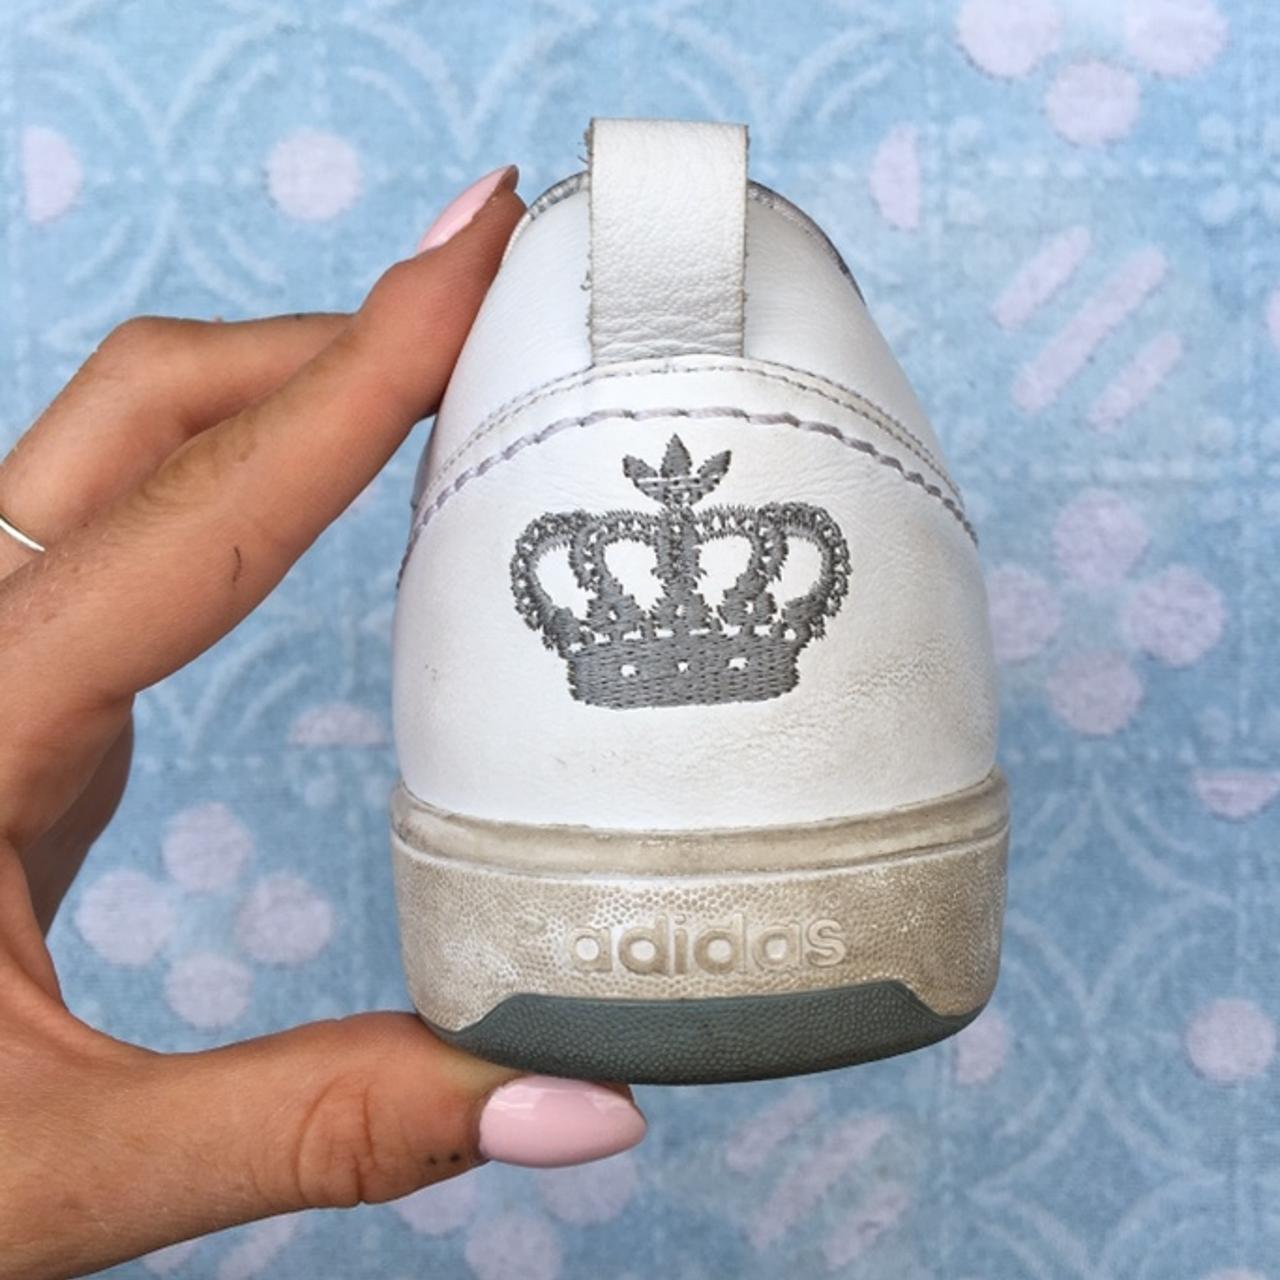 Adidas Originals | Depop